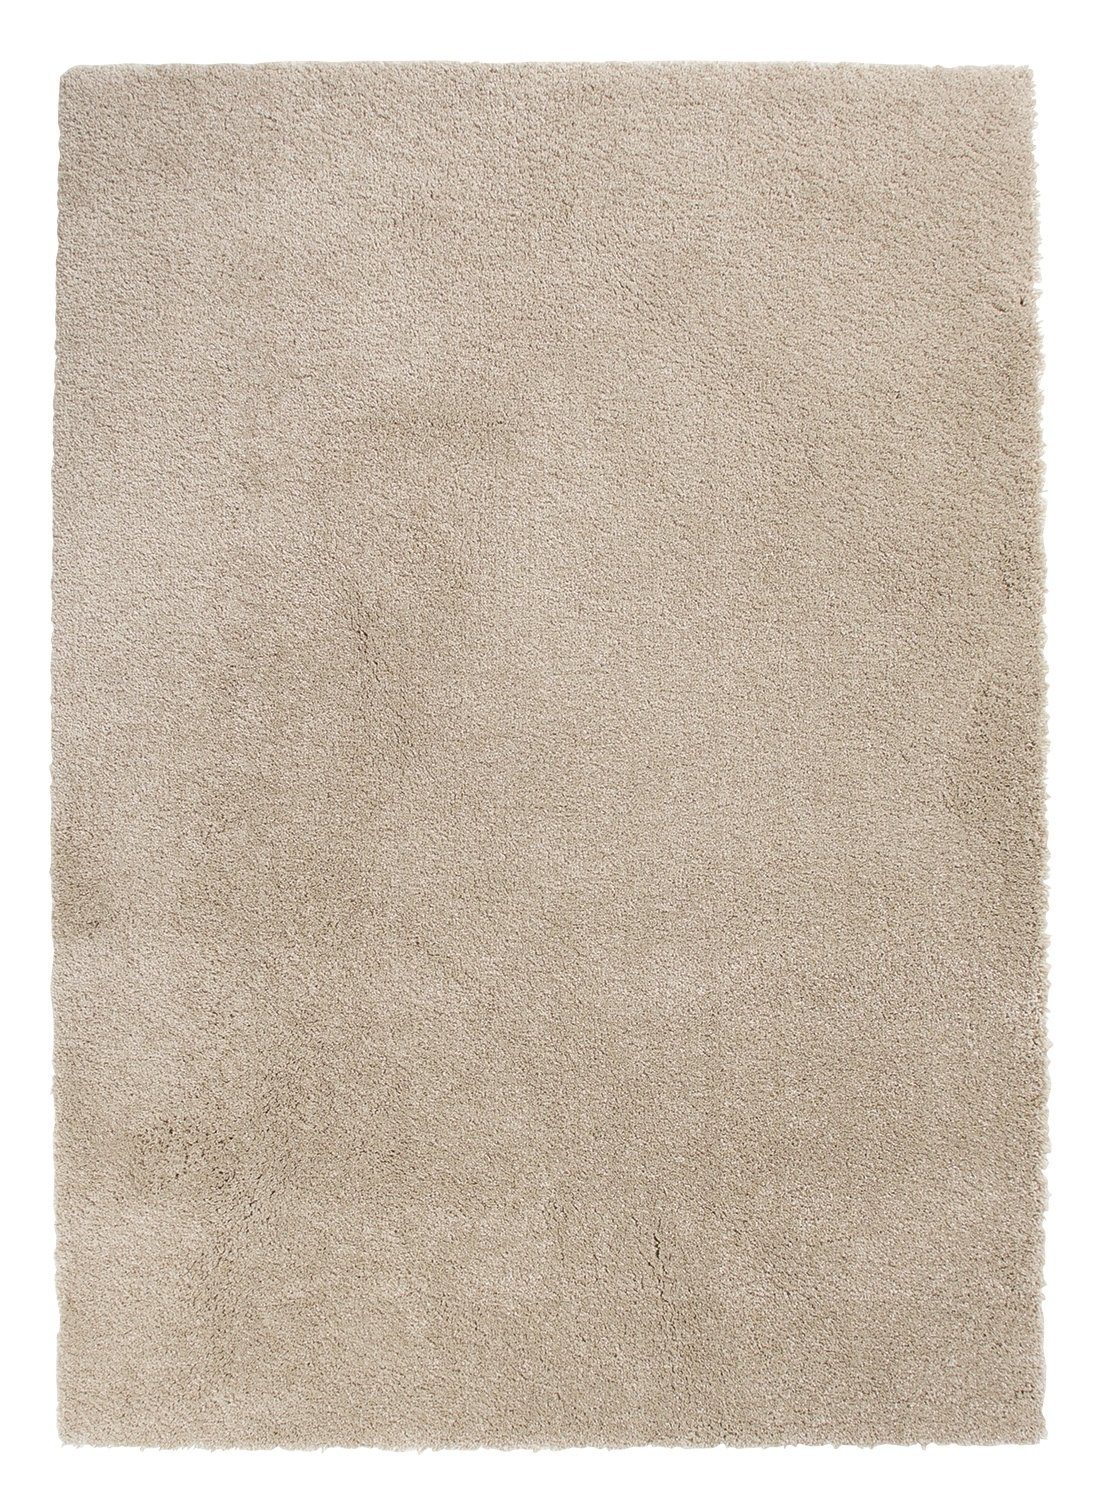 Teppich DELIGHT COSY, Polypropylen, Beige, 60 x 115 cm, Balta Rugs, rechteckig, Höhe: 22 mm | Kurzflor-Teppiche